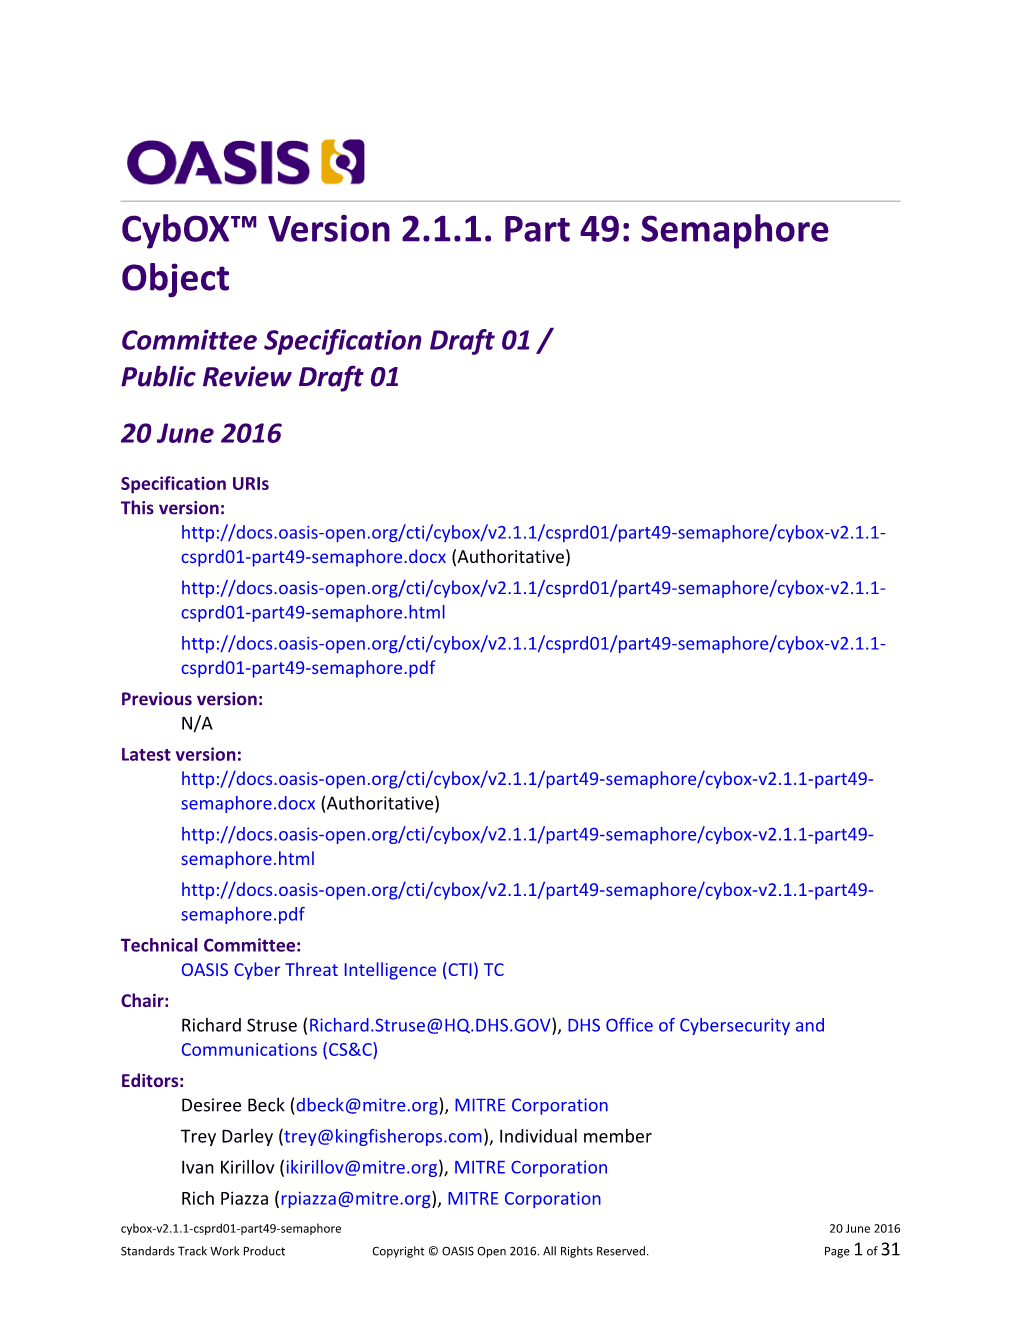 Cybox Version 2.1.1. Part 49: Semaphore Object